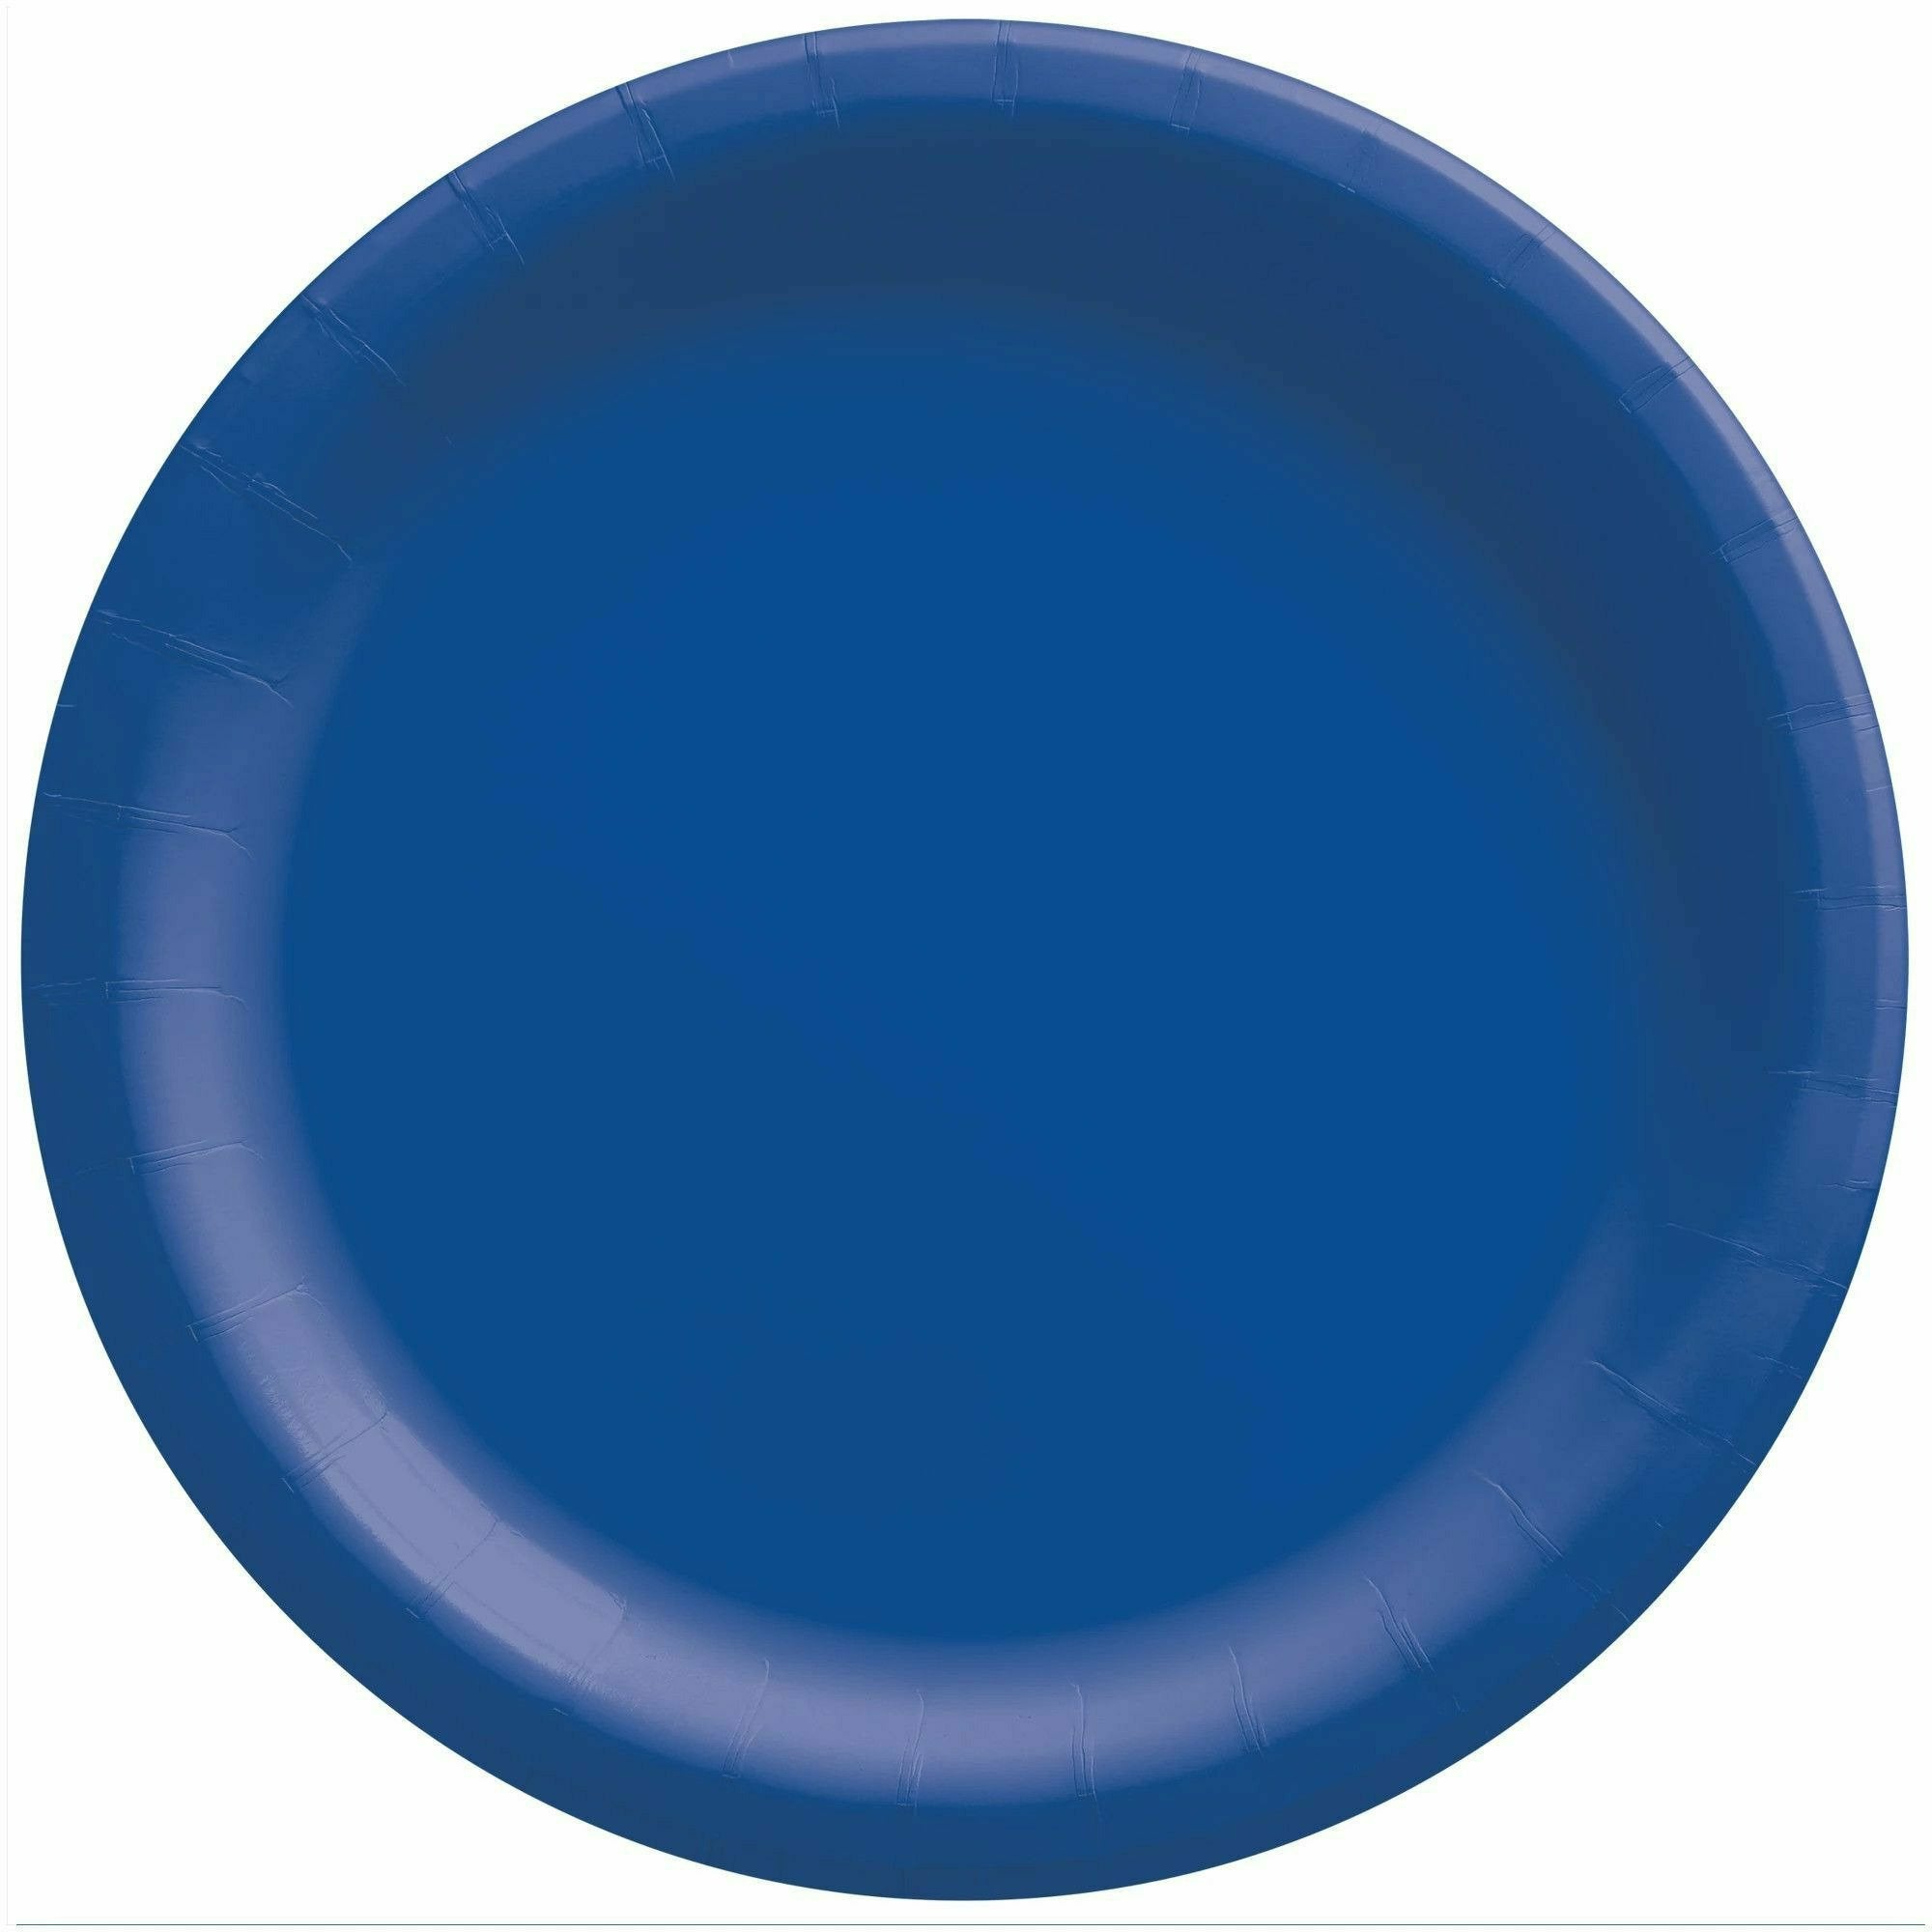 Amscan BASIC Bright Royal Blue - 6 3/4" Round Paper Plates, 50 Ct.